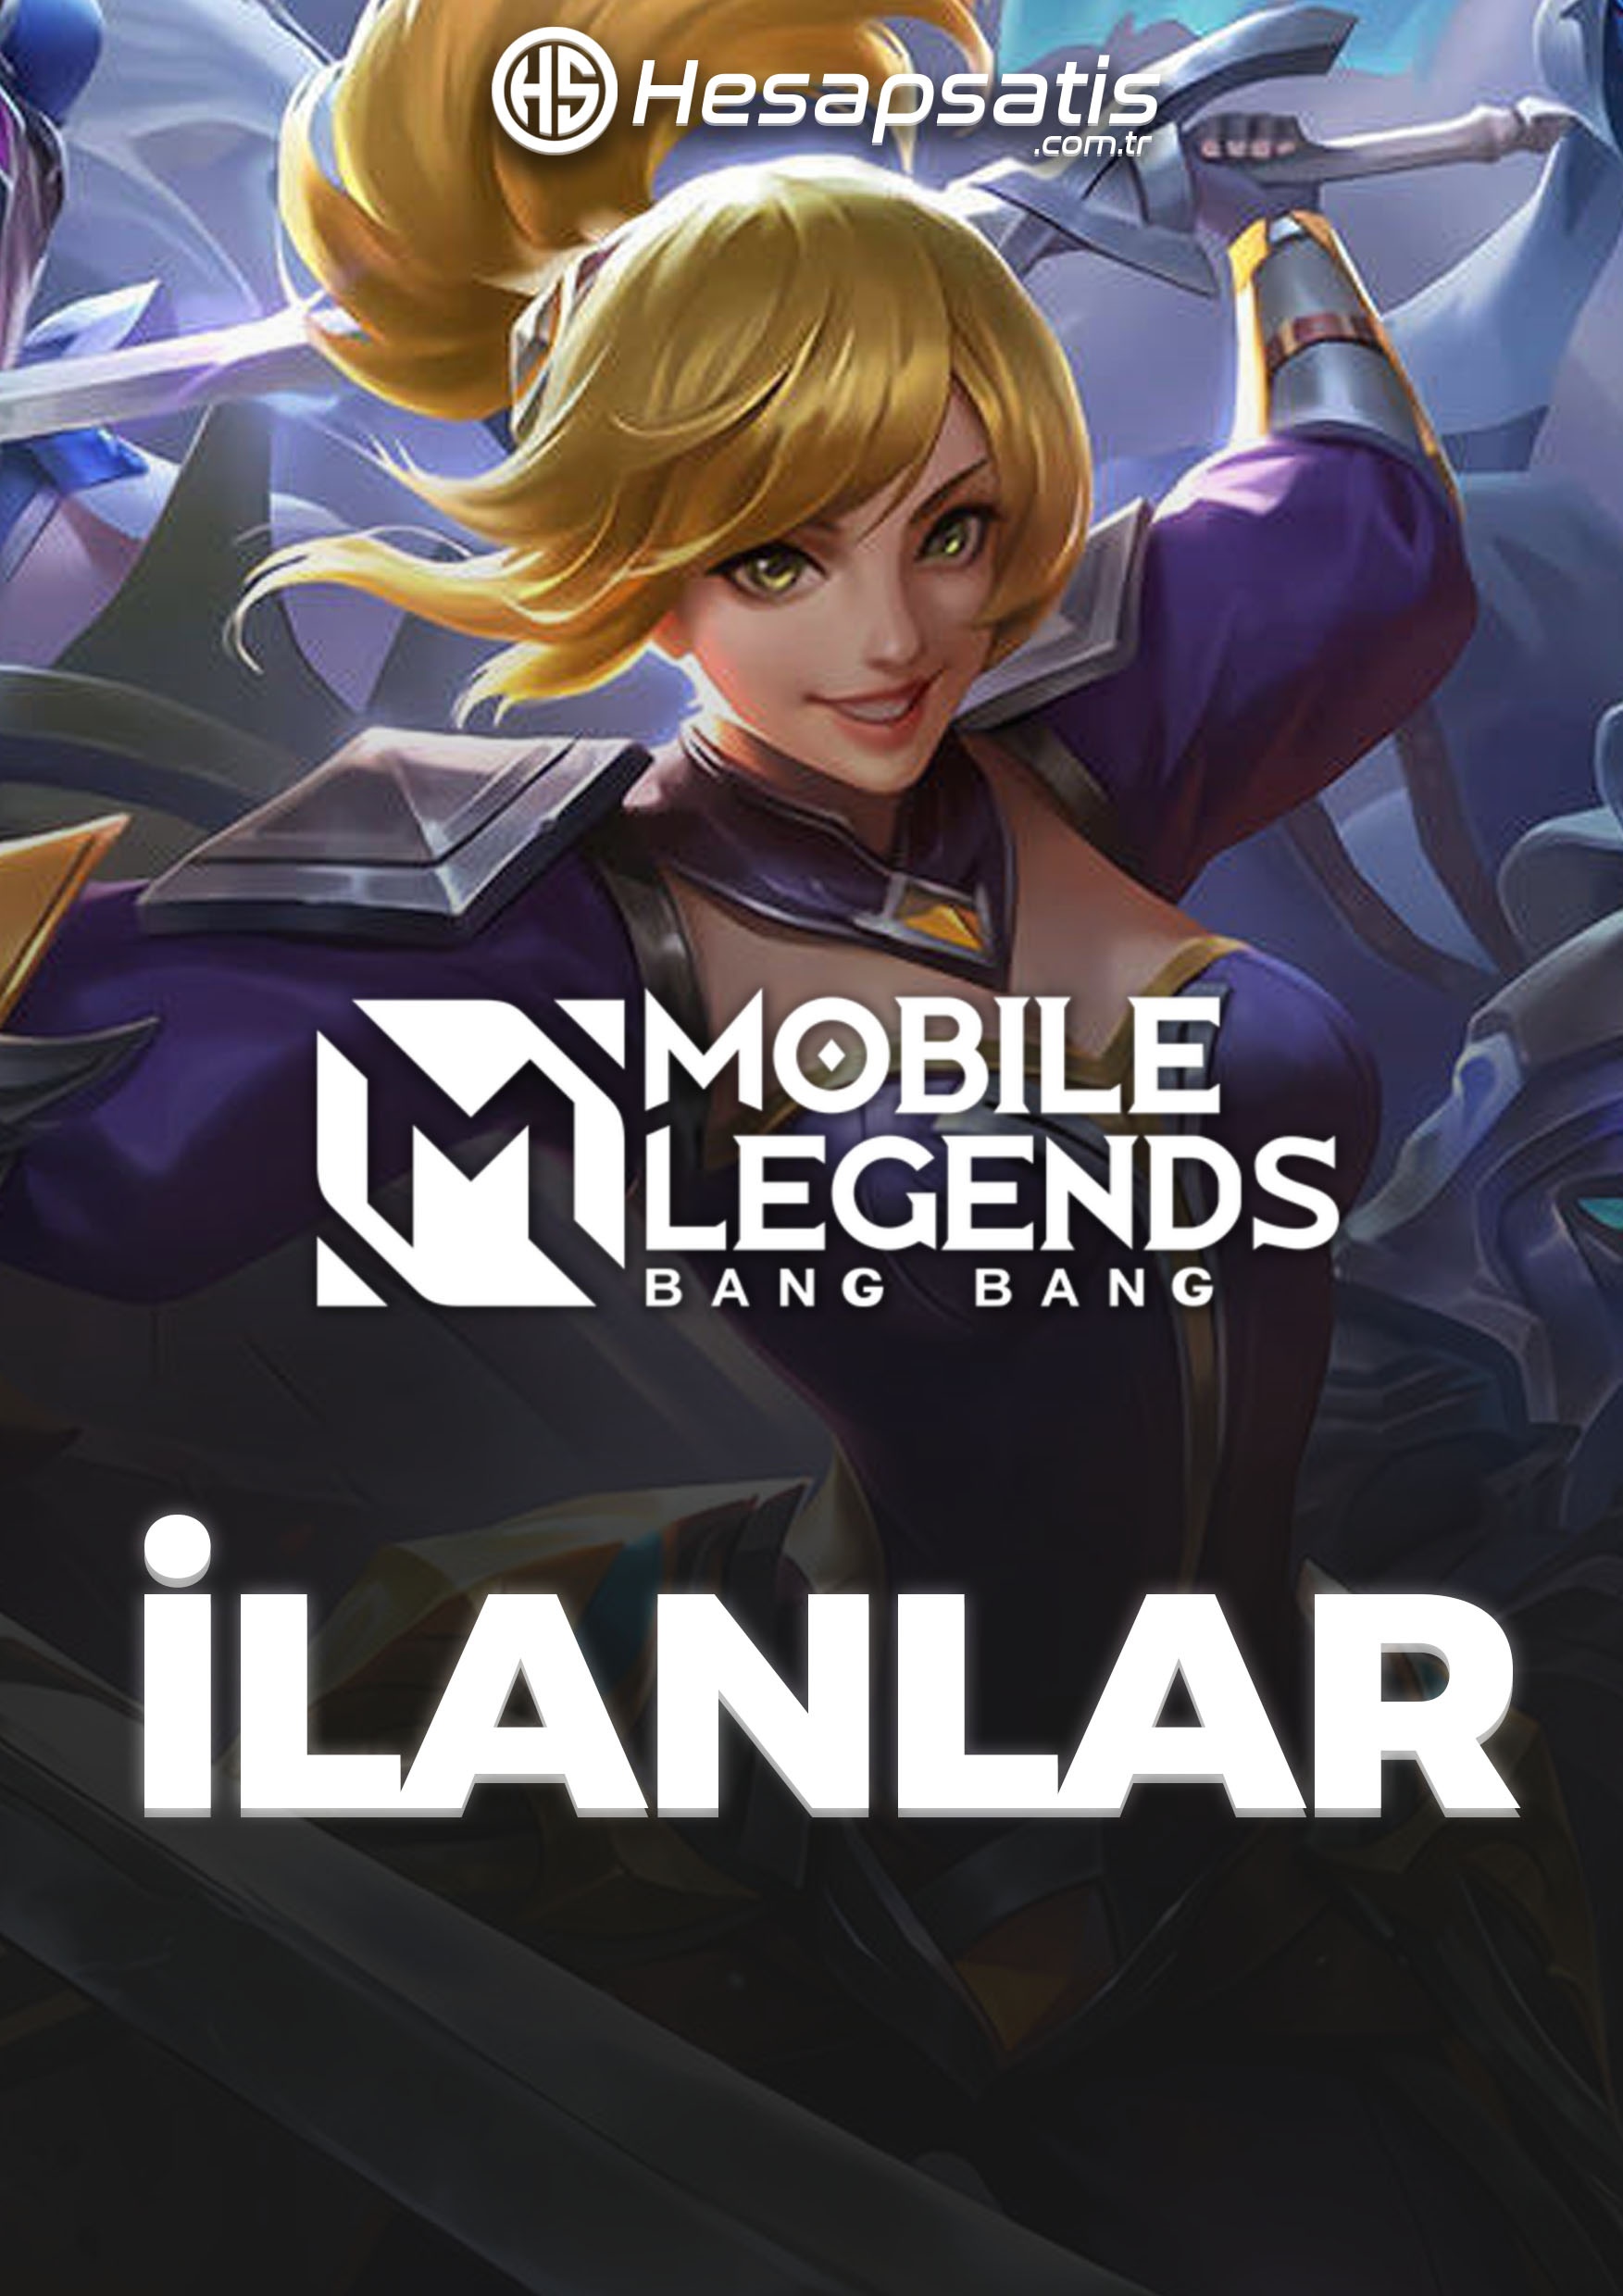 Mobile Legends: Bang Bang ilanlar